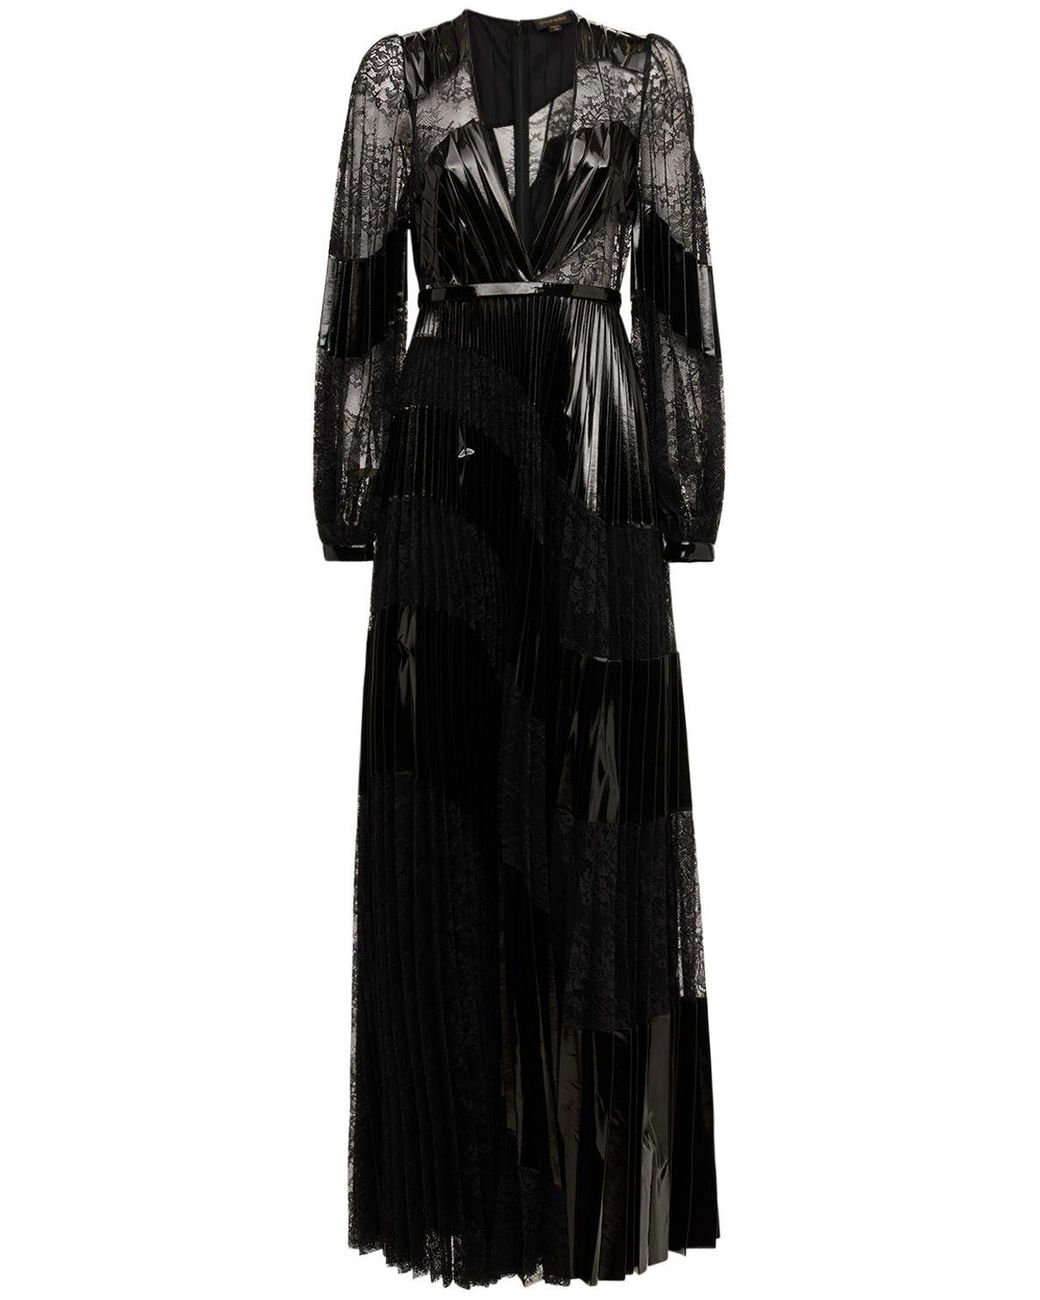 Zuhair Murad Vinyl & Lace Long Sleeve Gown in Black | Lyst